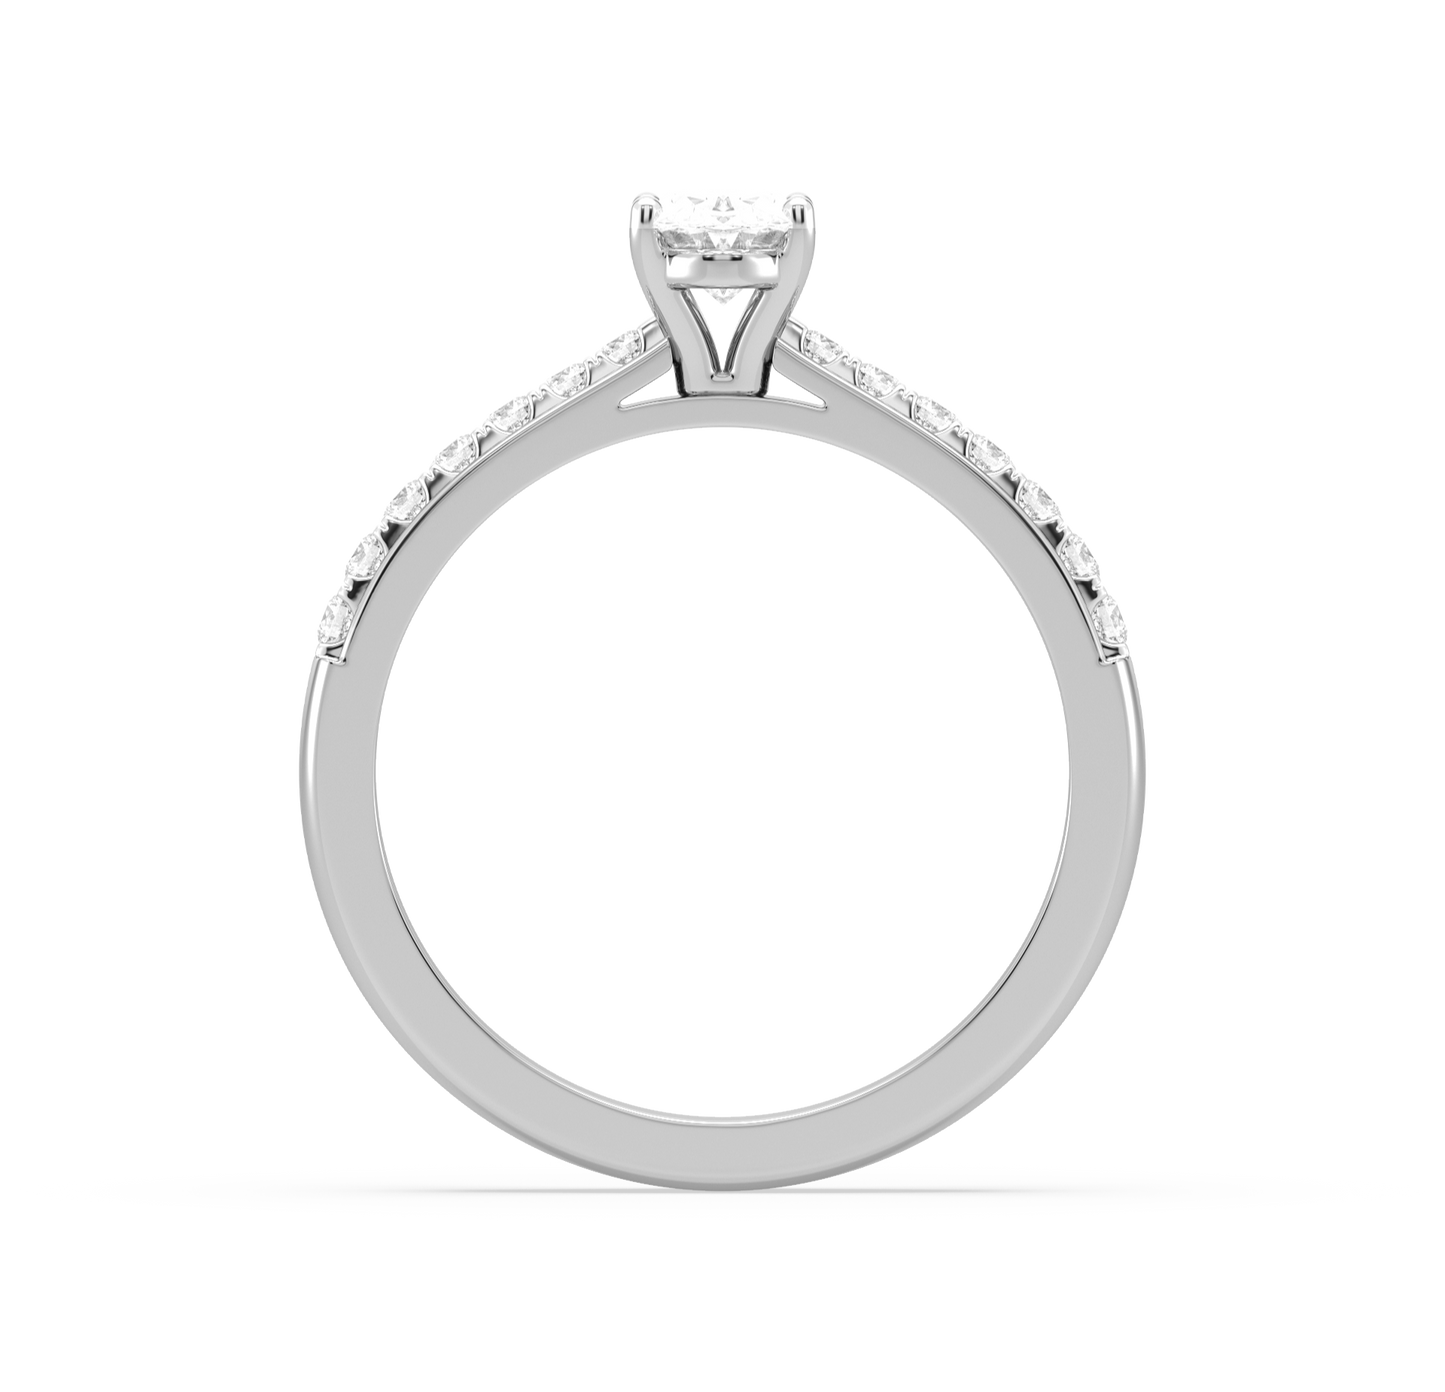 Customised ring RG21008-PH21021